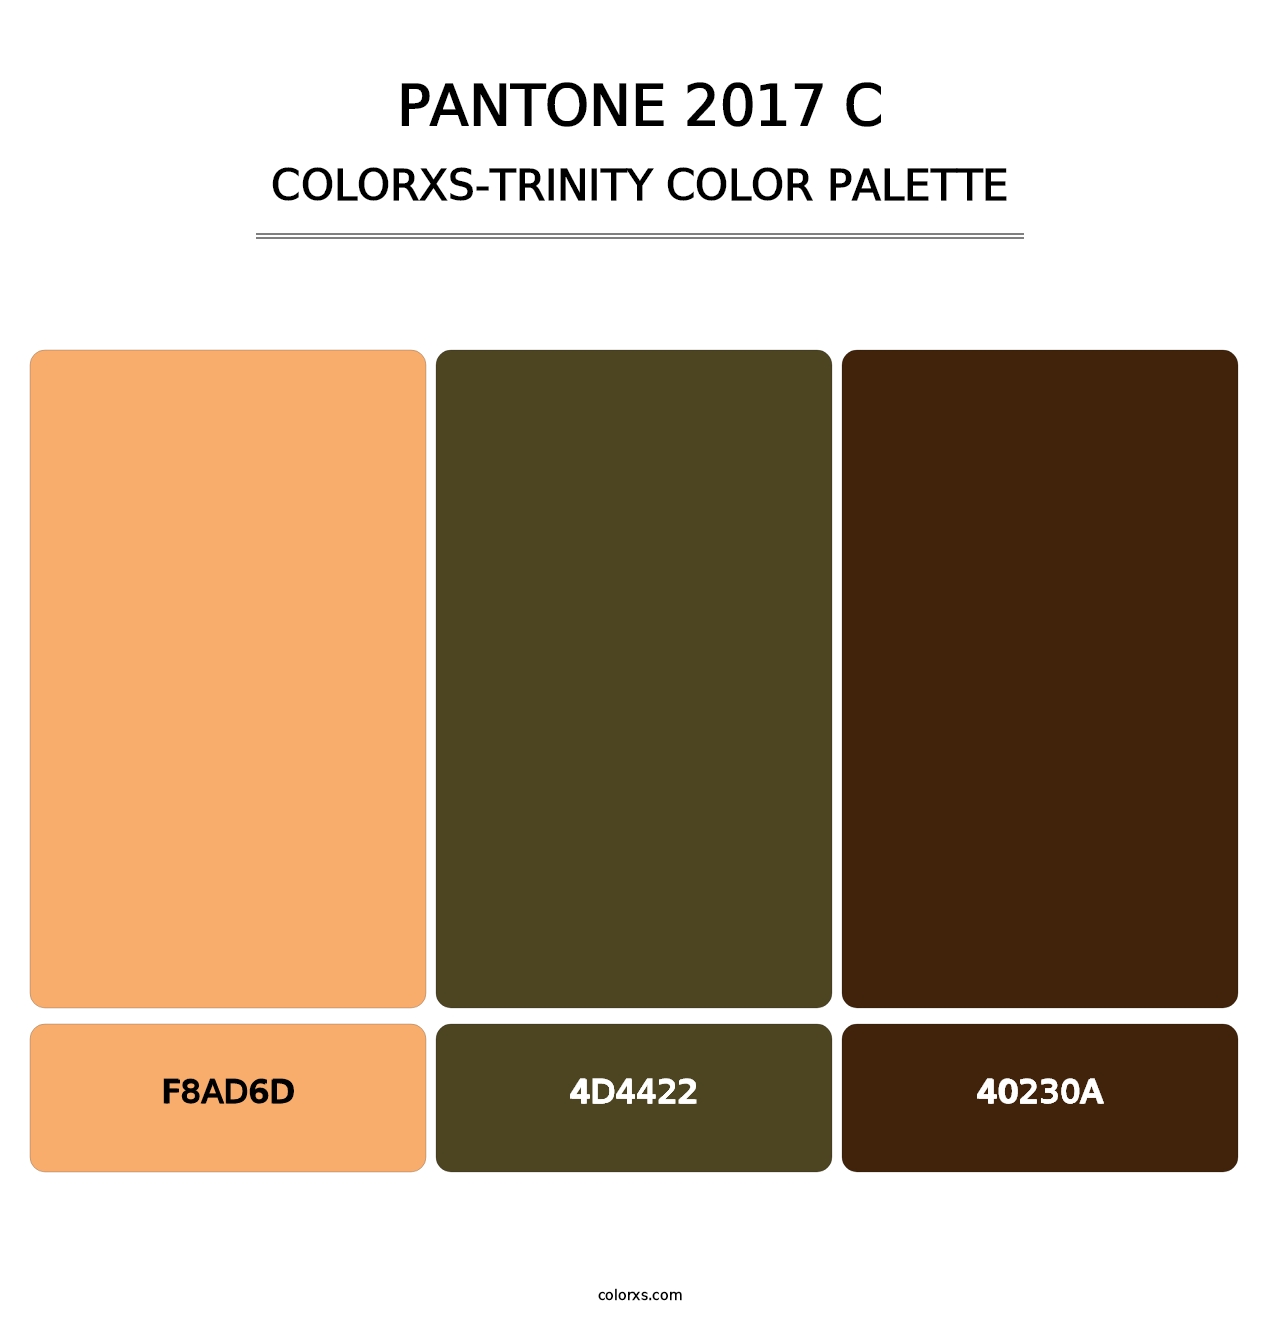 PANTONE 2017 C - Colorxs Trinity Palette